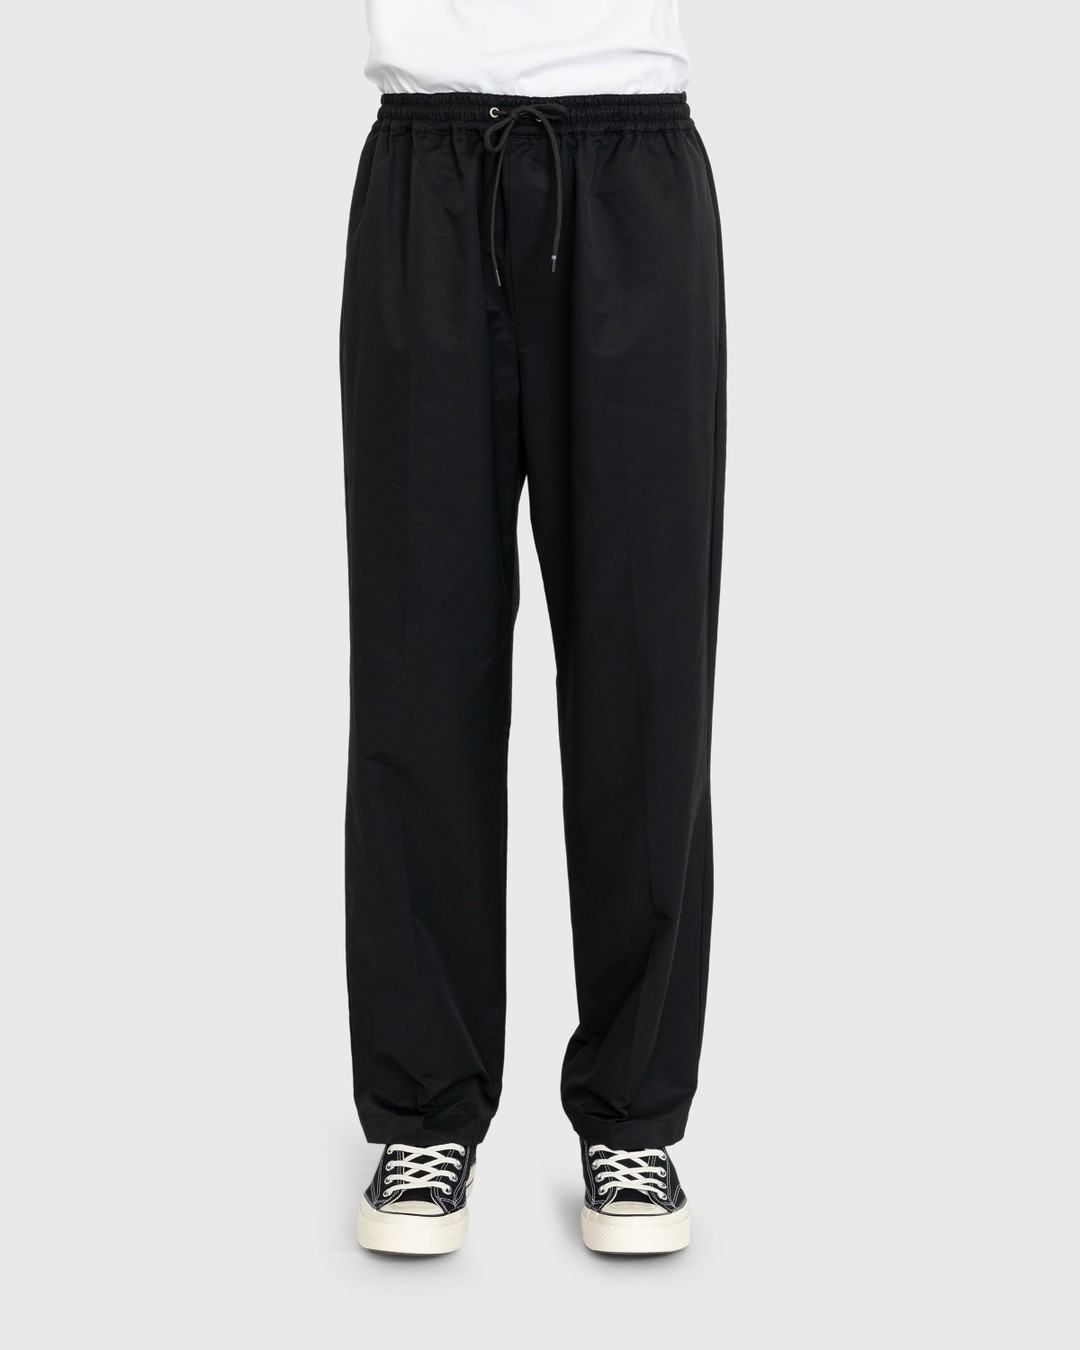 Highsnobiety – Cotton Nylon Elastic Pants Black - Trousers - Black - Image 2